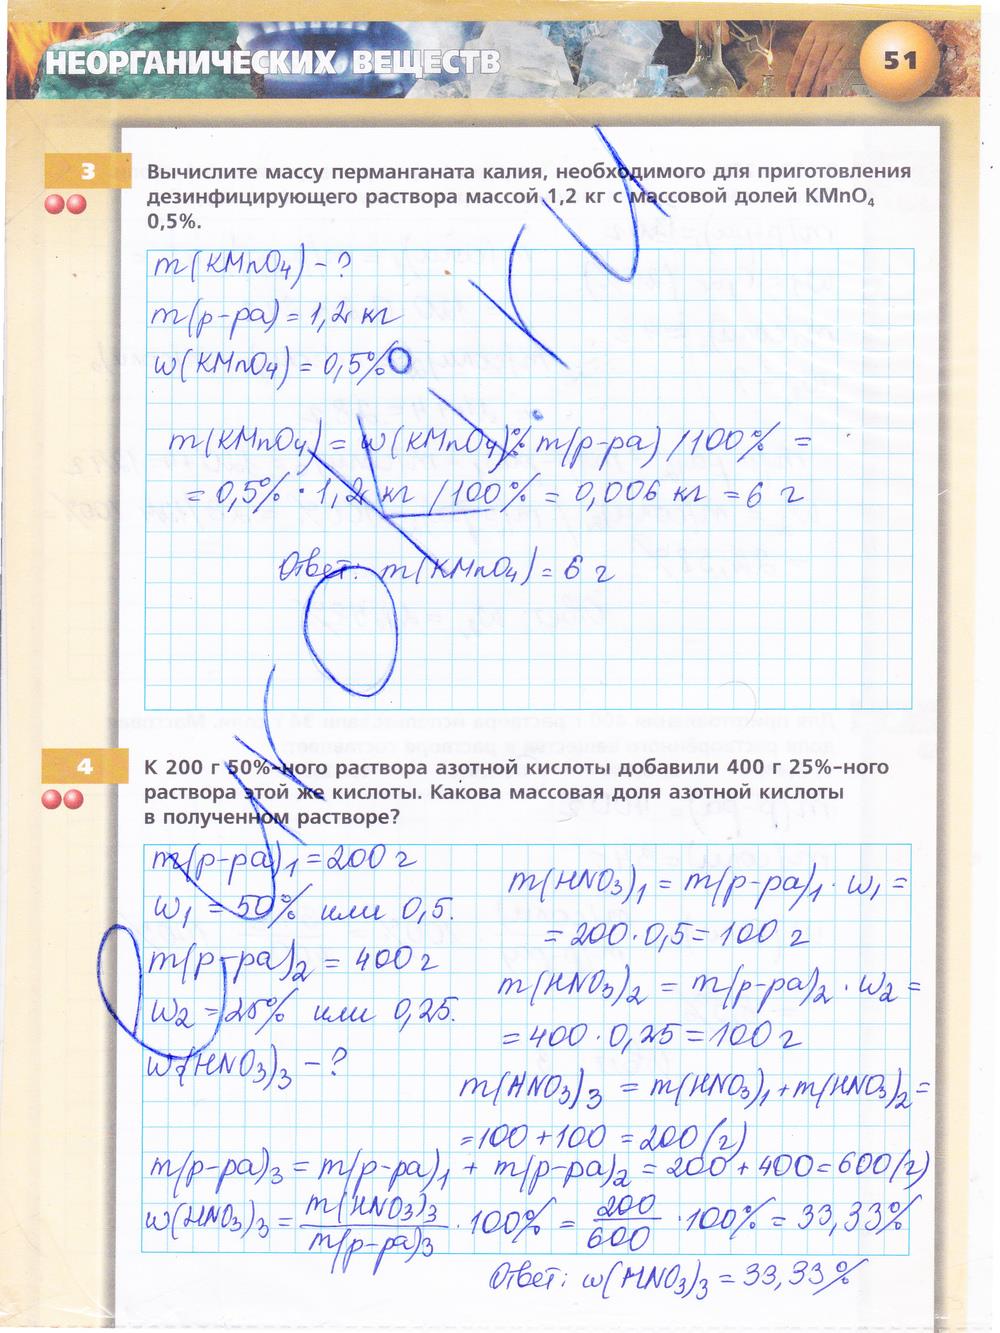 гдз 8 класс тетрадь-тренажёр страница 51 химия Гара